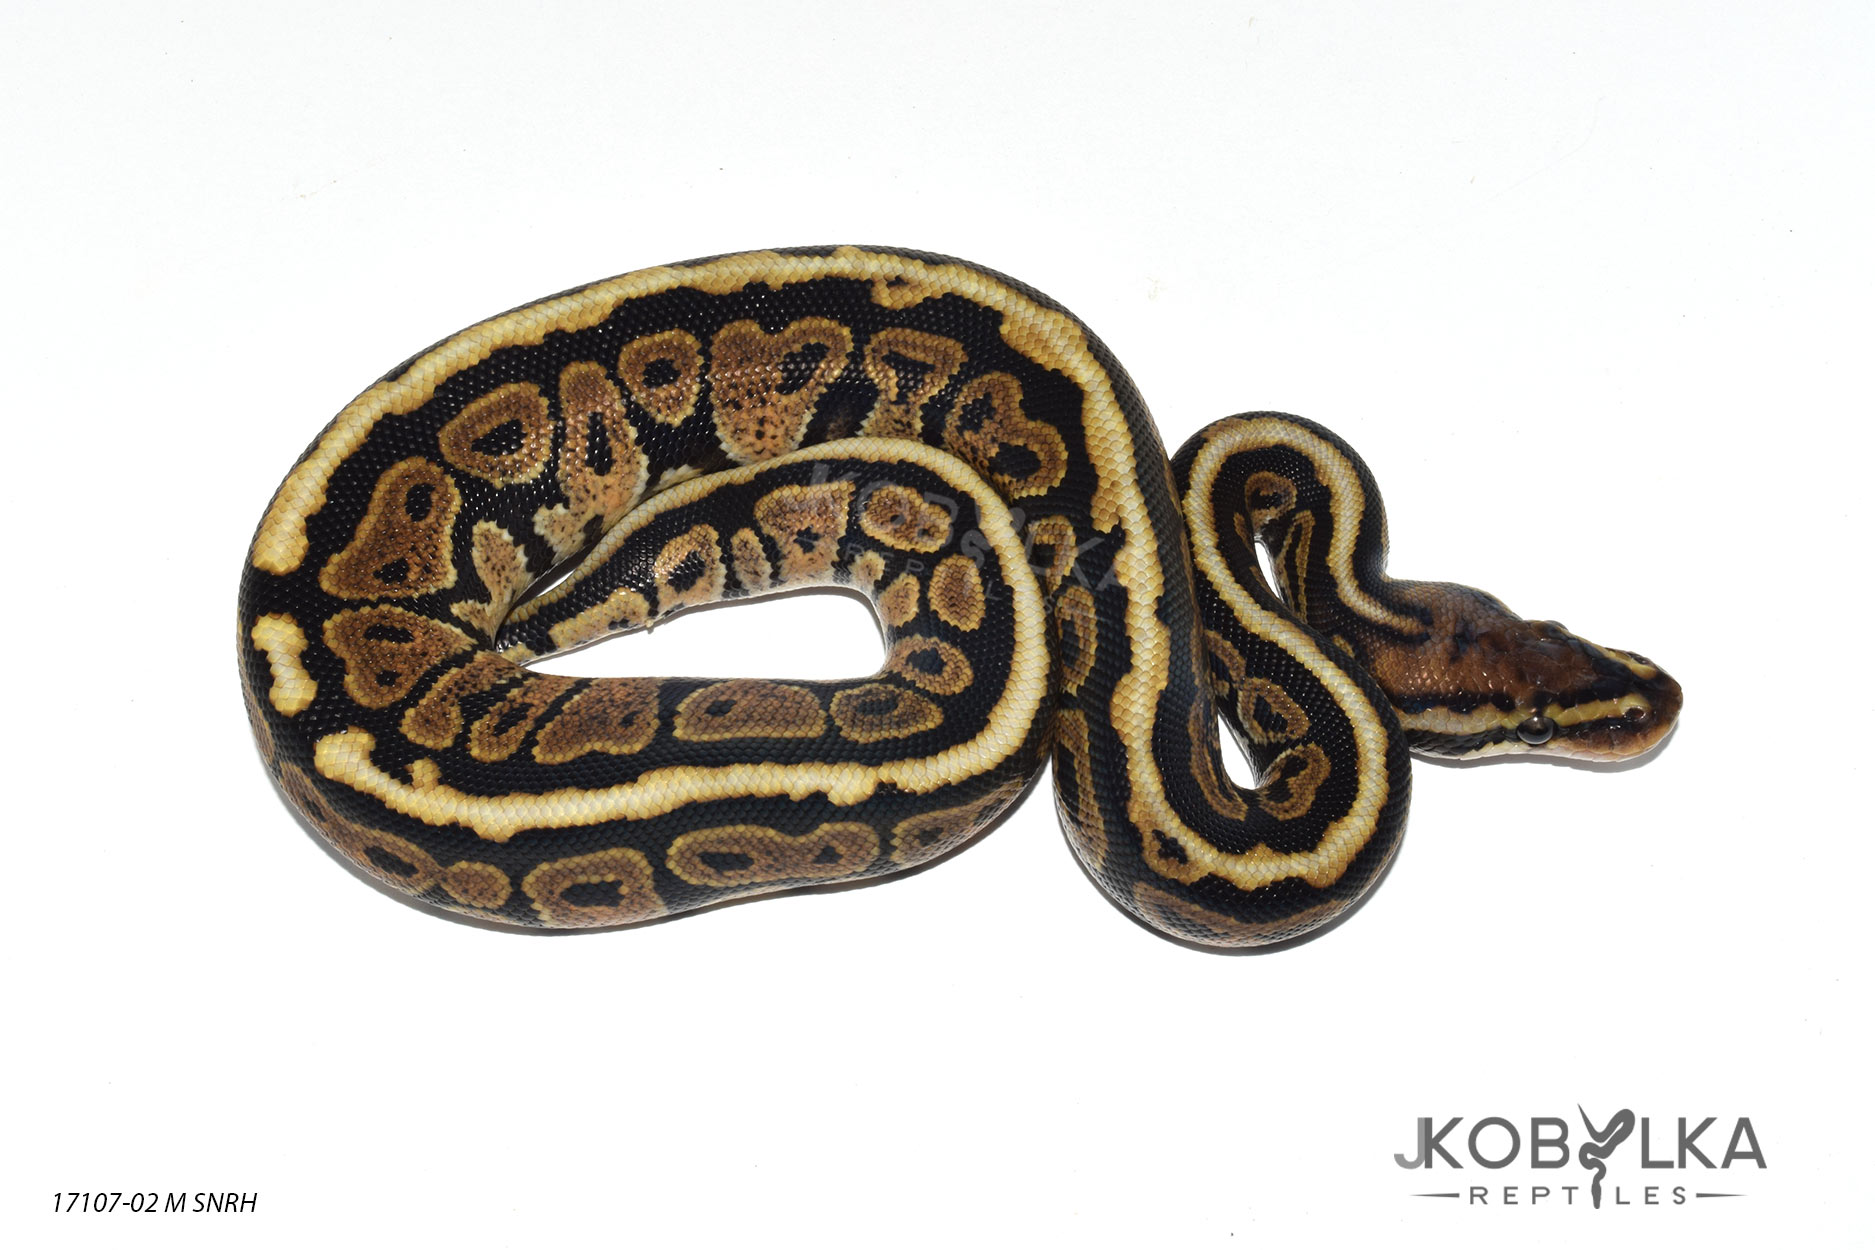 Spotnose Redhead Ball Python by J.Kobylka Reptiles